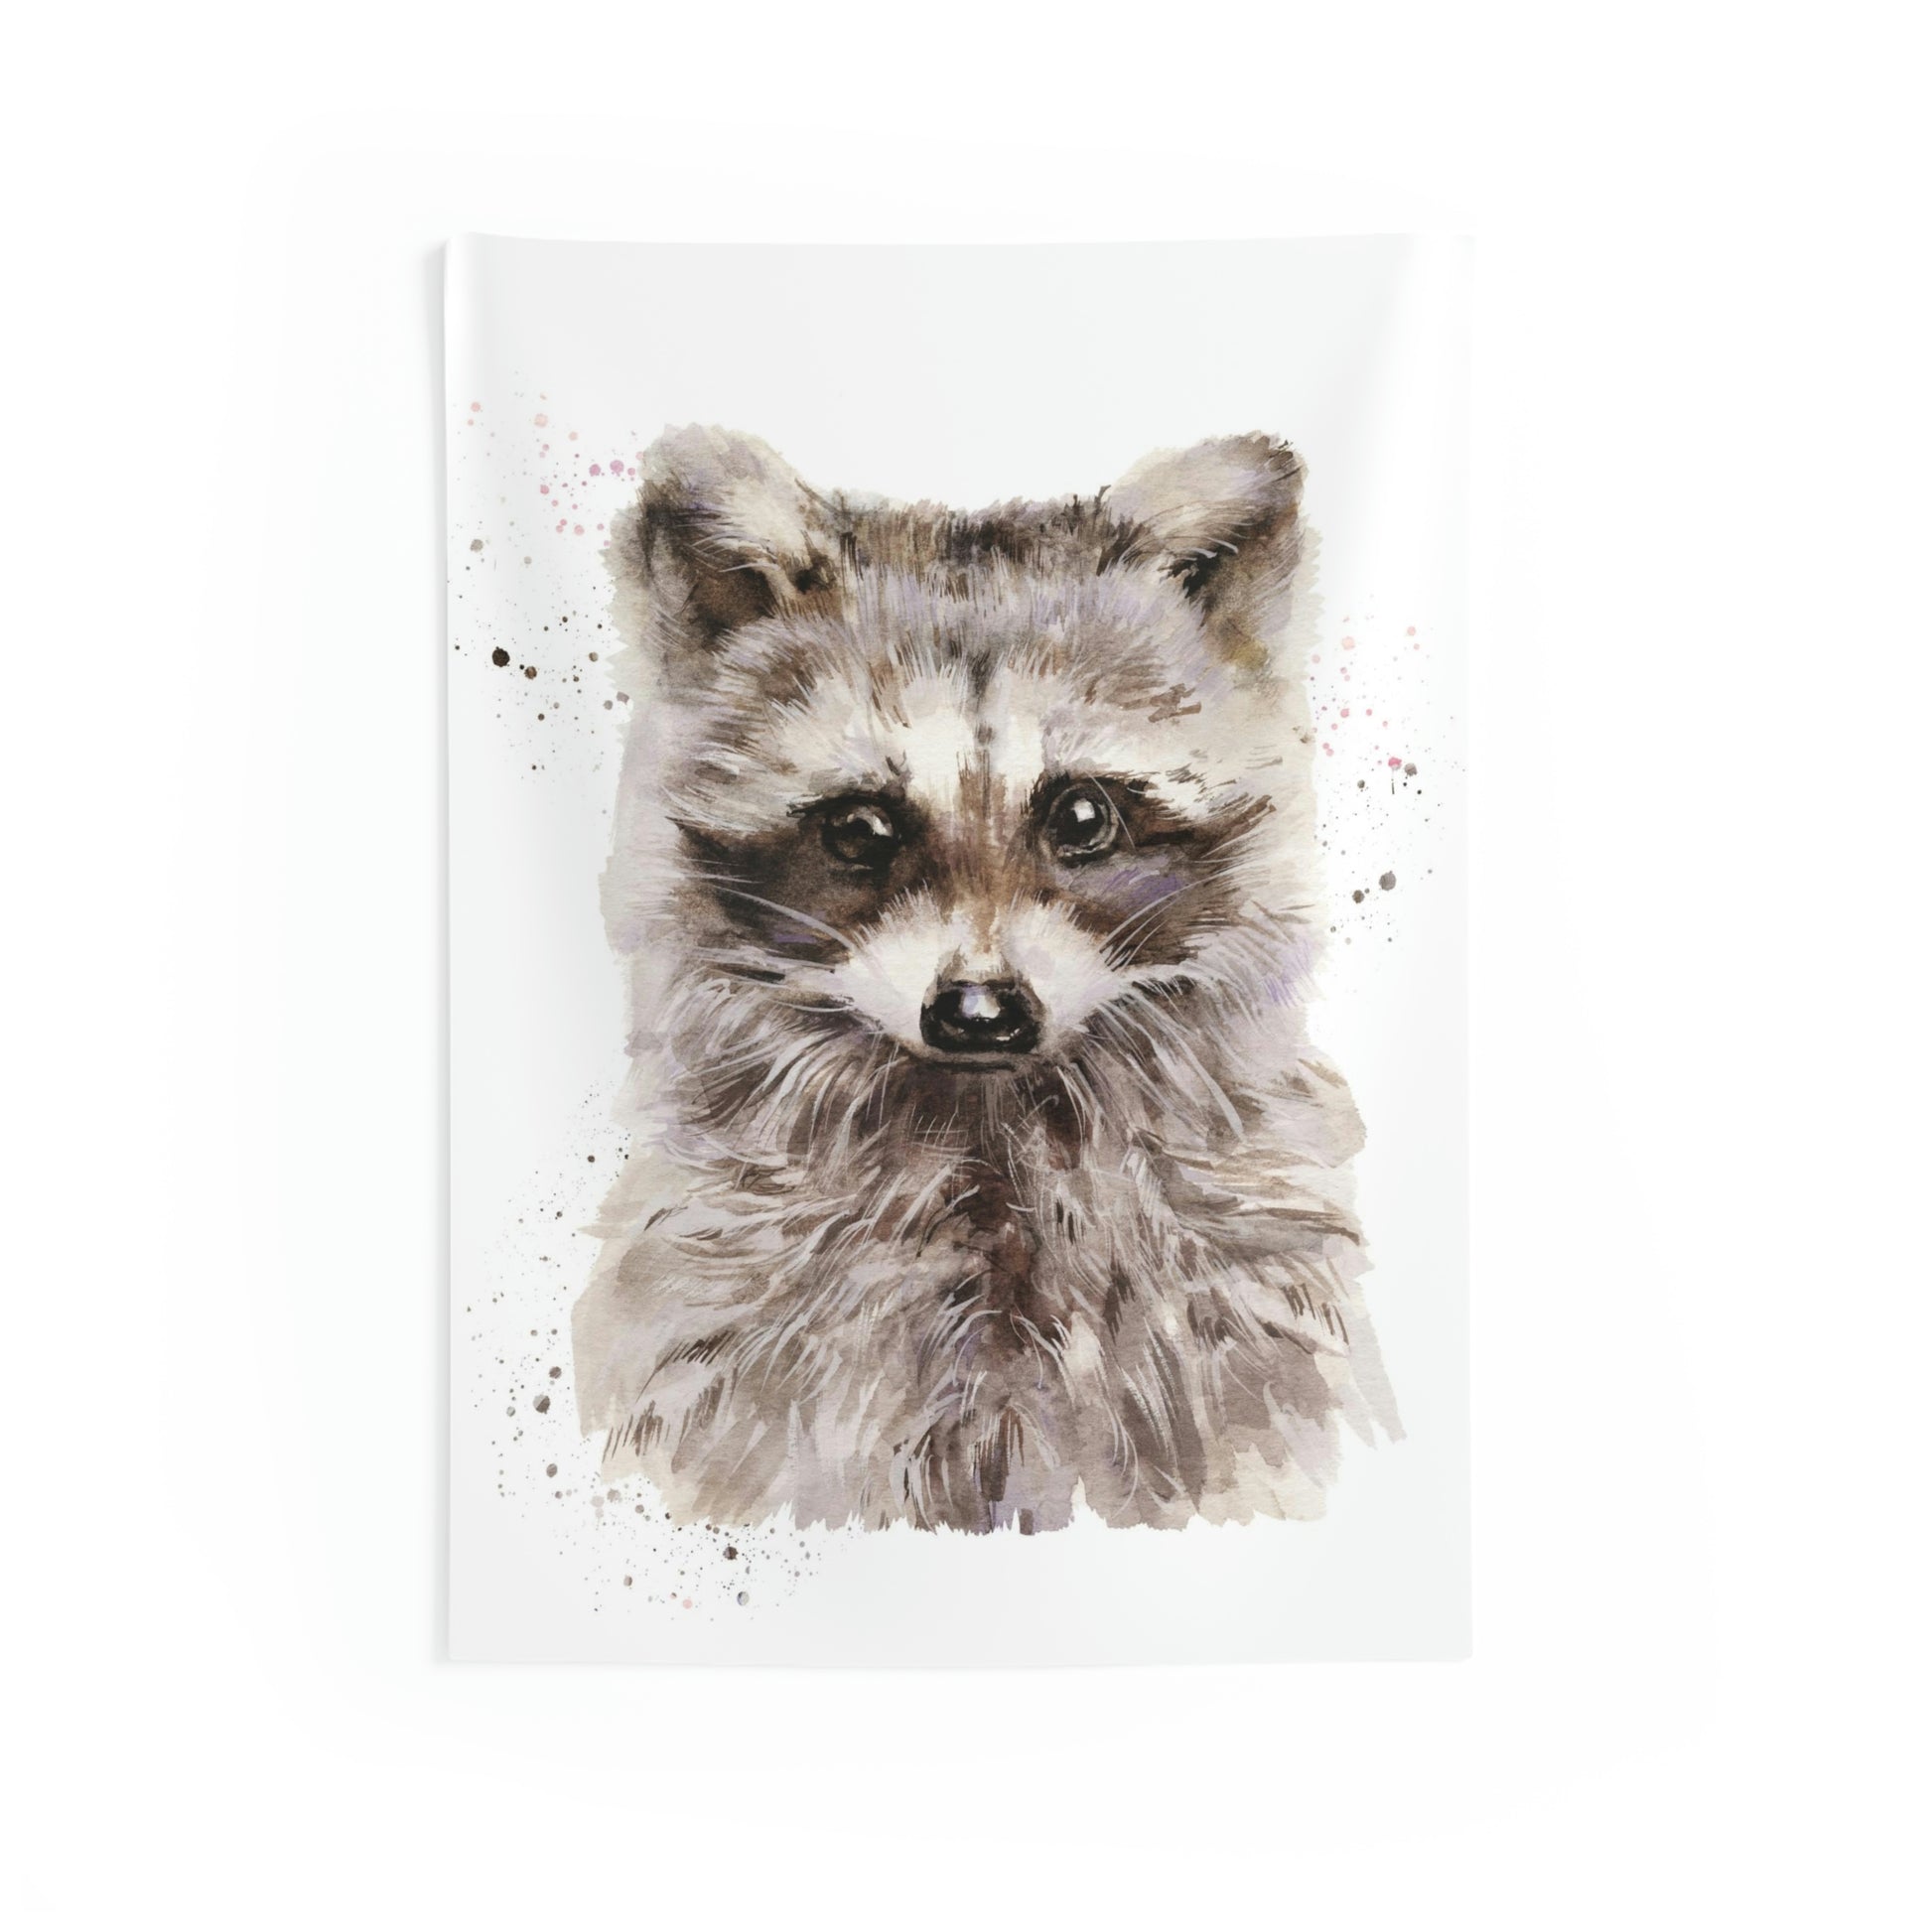 The Raccoon Indoor Wall Tapestry - Raccoon Paradise